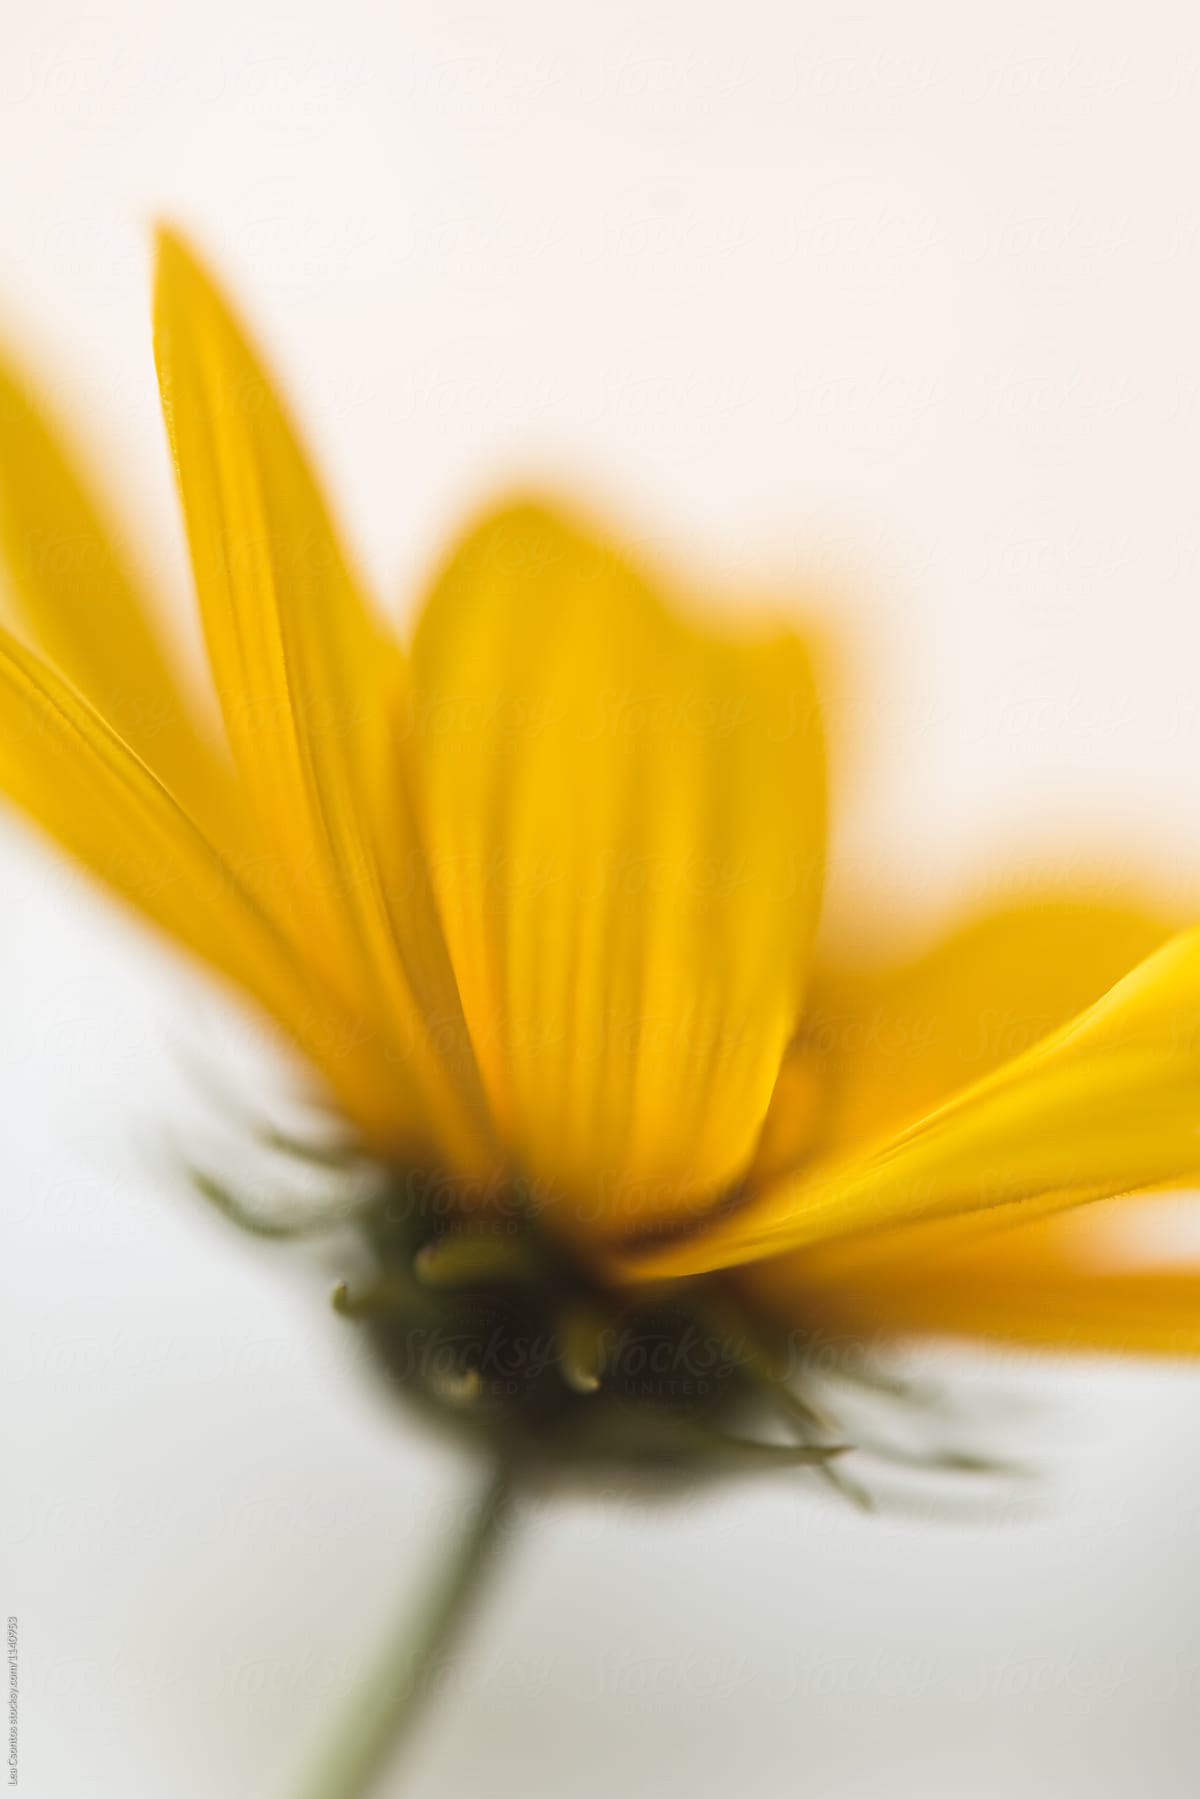 Closeup details of a yellow flower